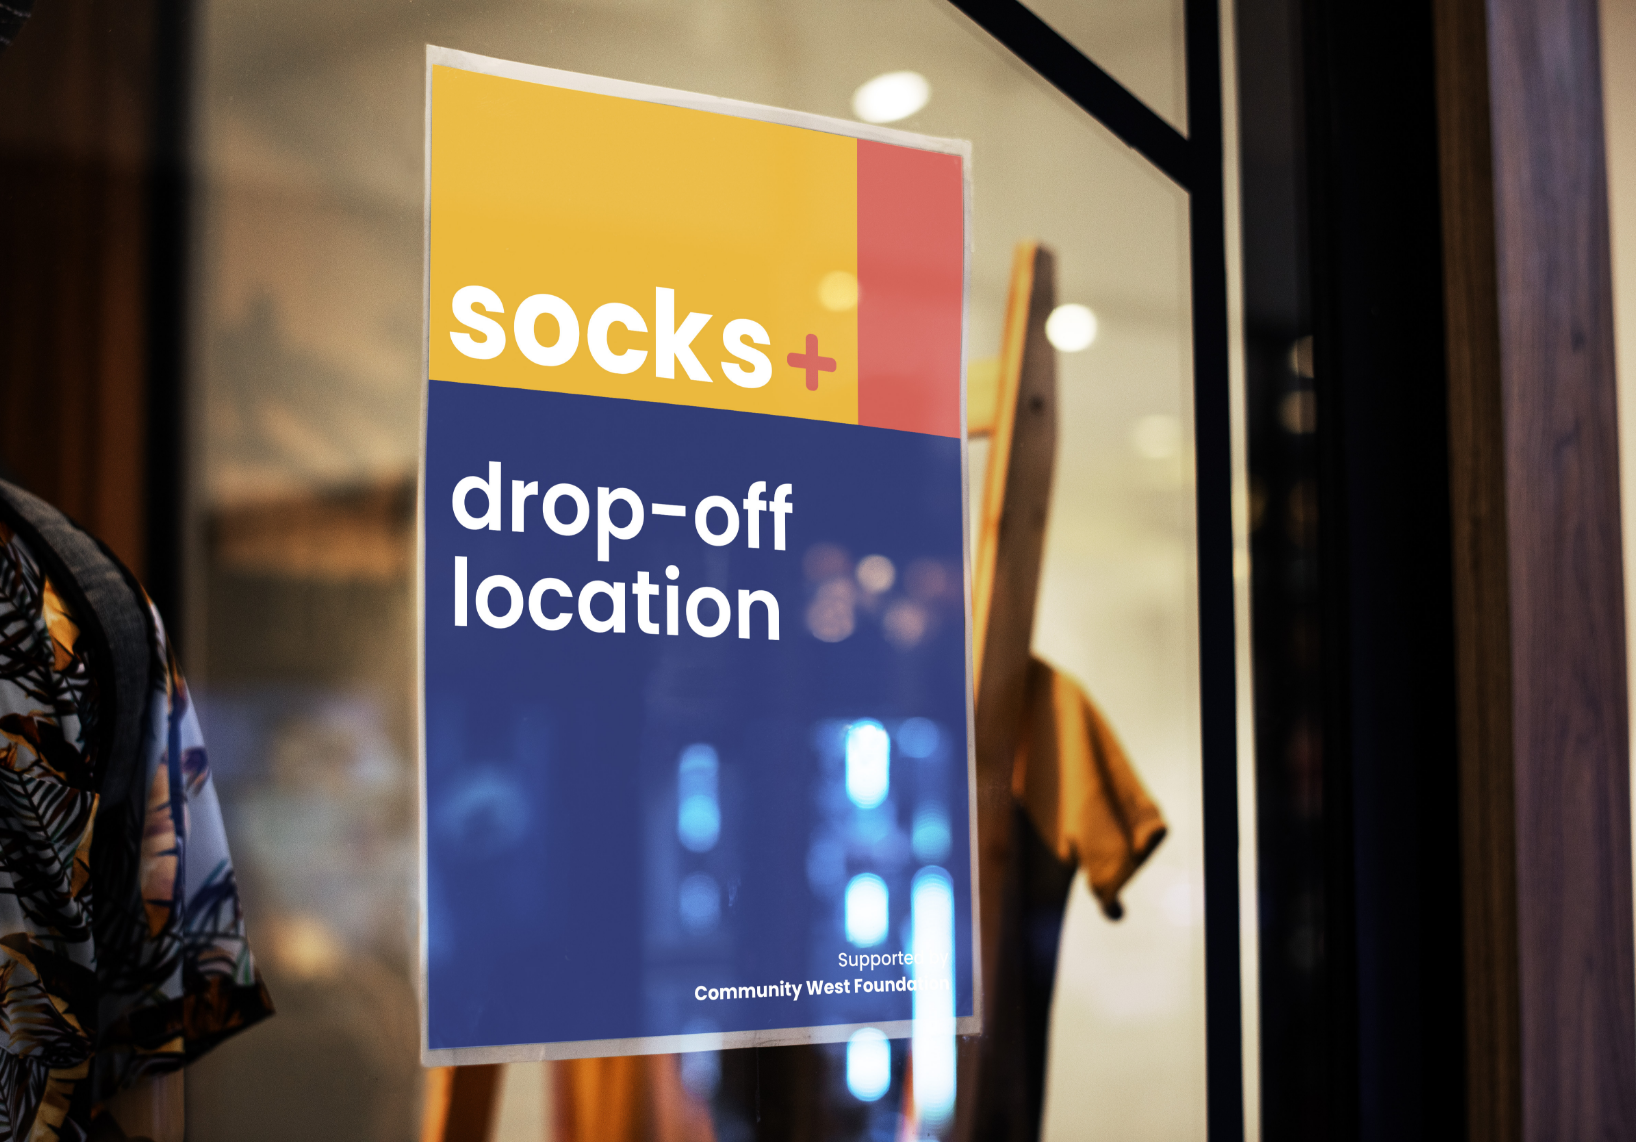 Socks+ Campaign sign